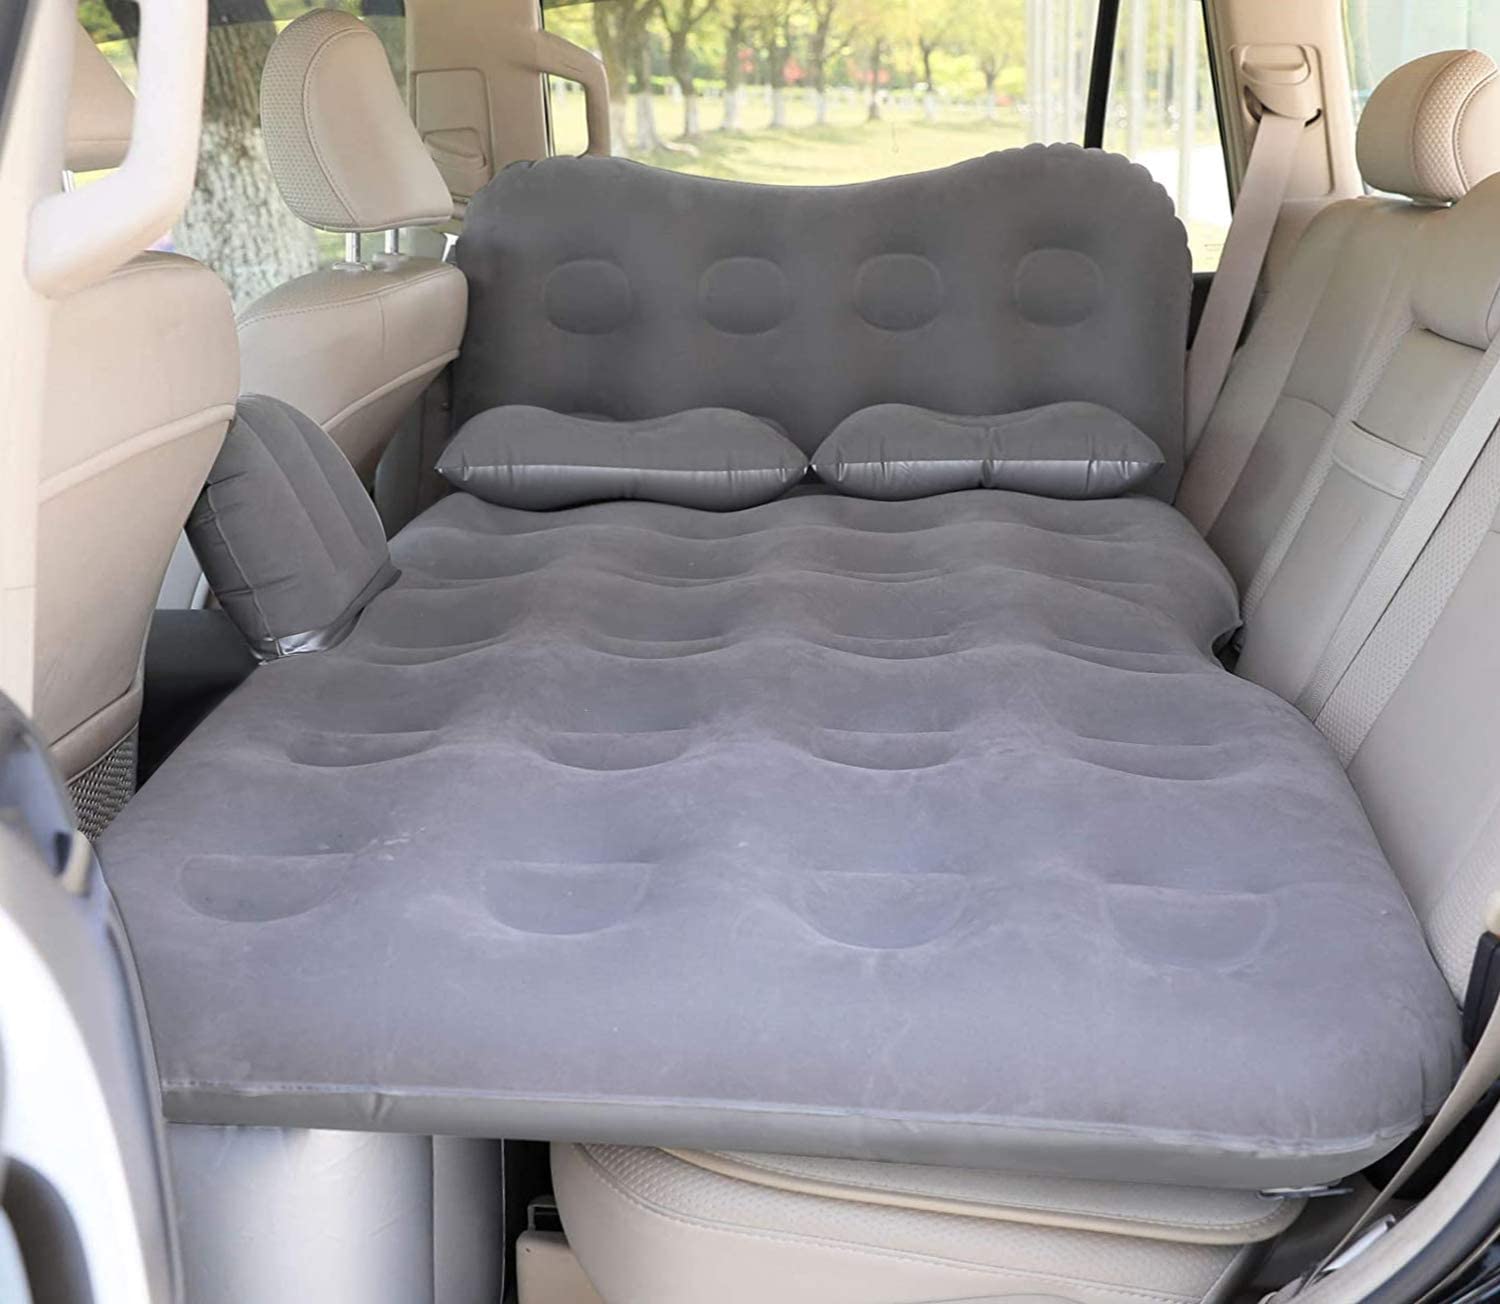 SAYGOGO Inflatable Car Air Mattress Travel Bed